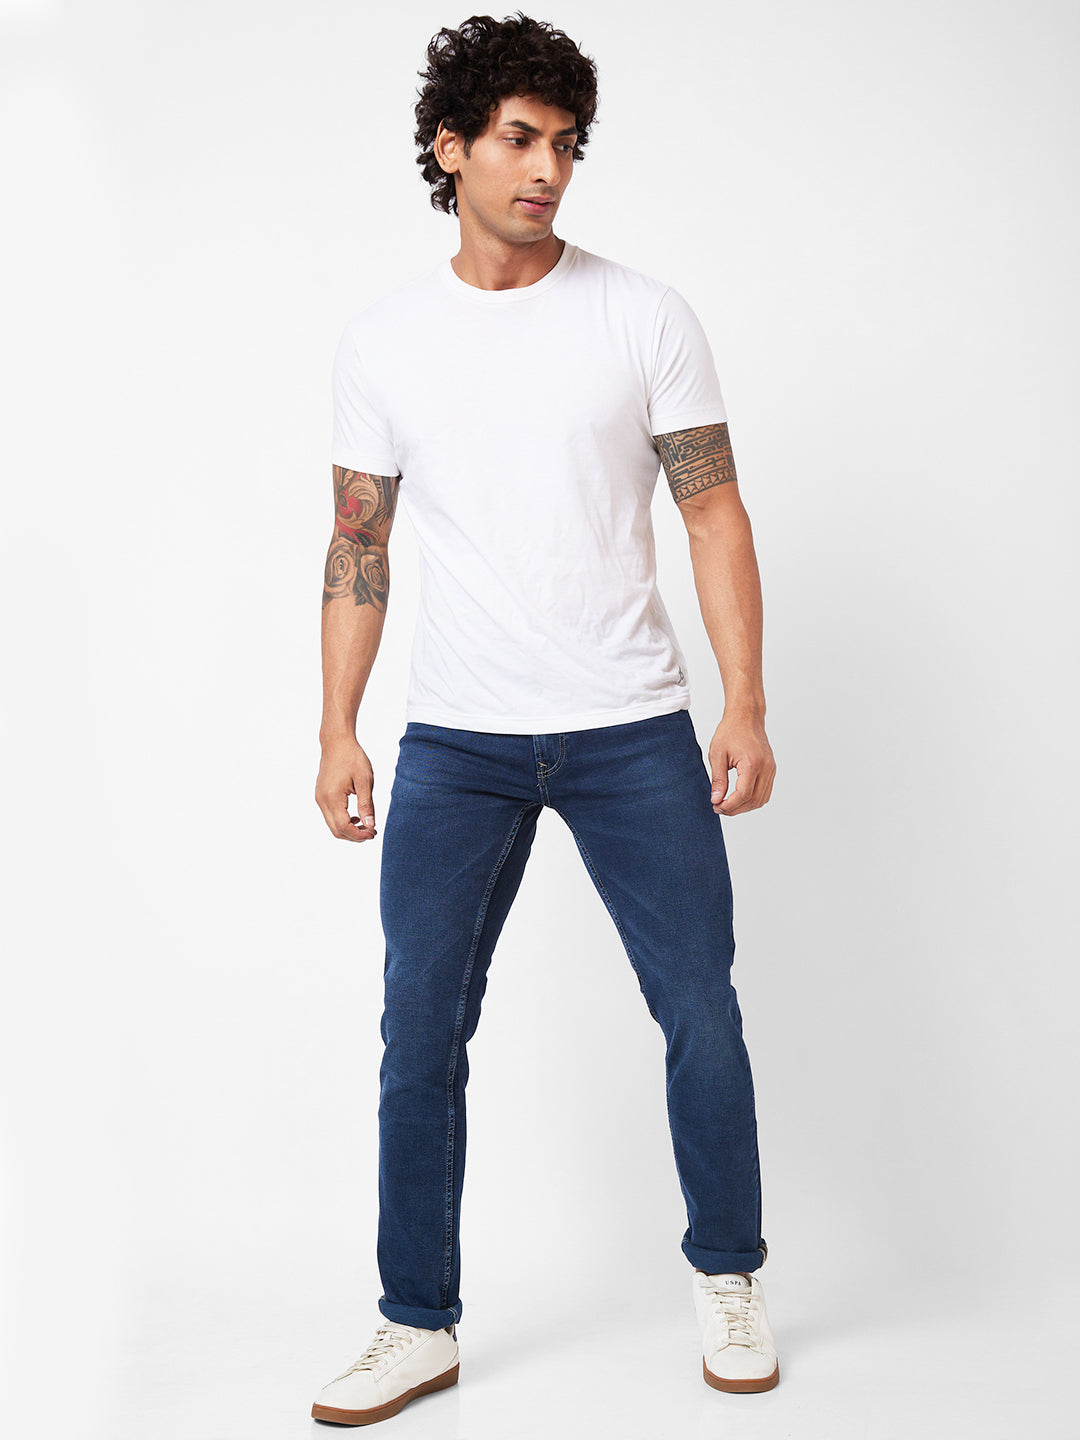 Spykar Mid-Rise Regular Fit Blue Jeans For Men